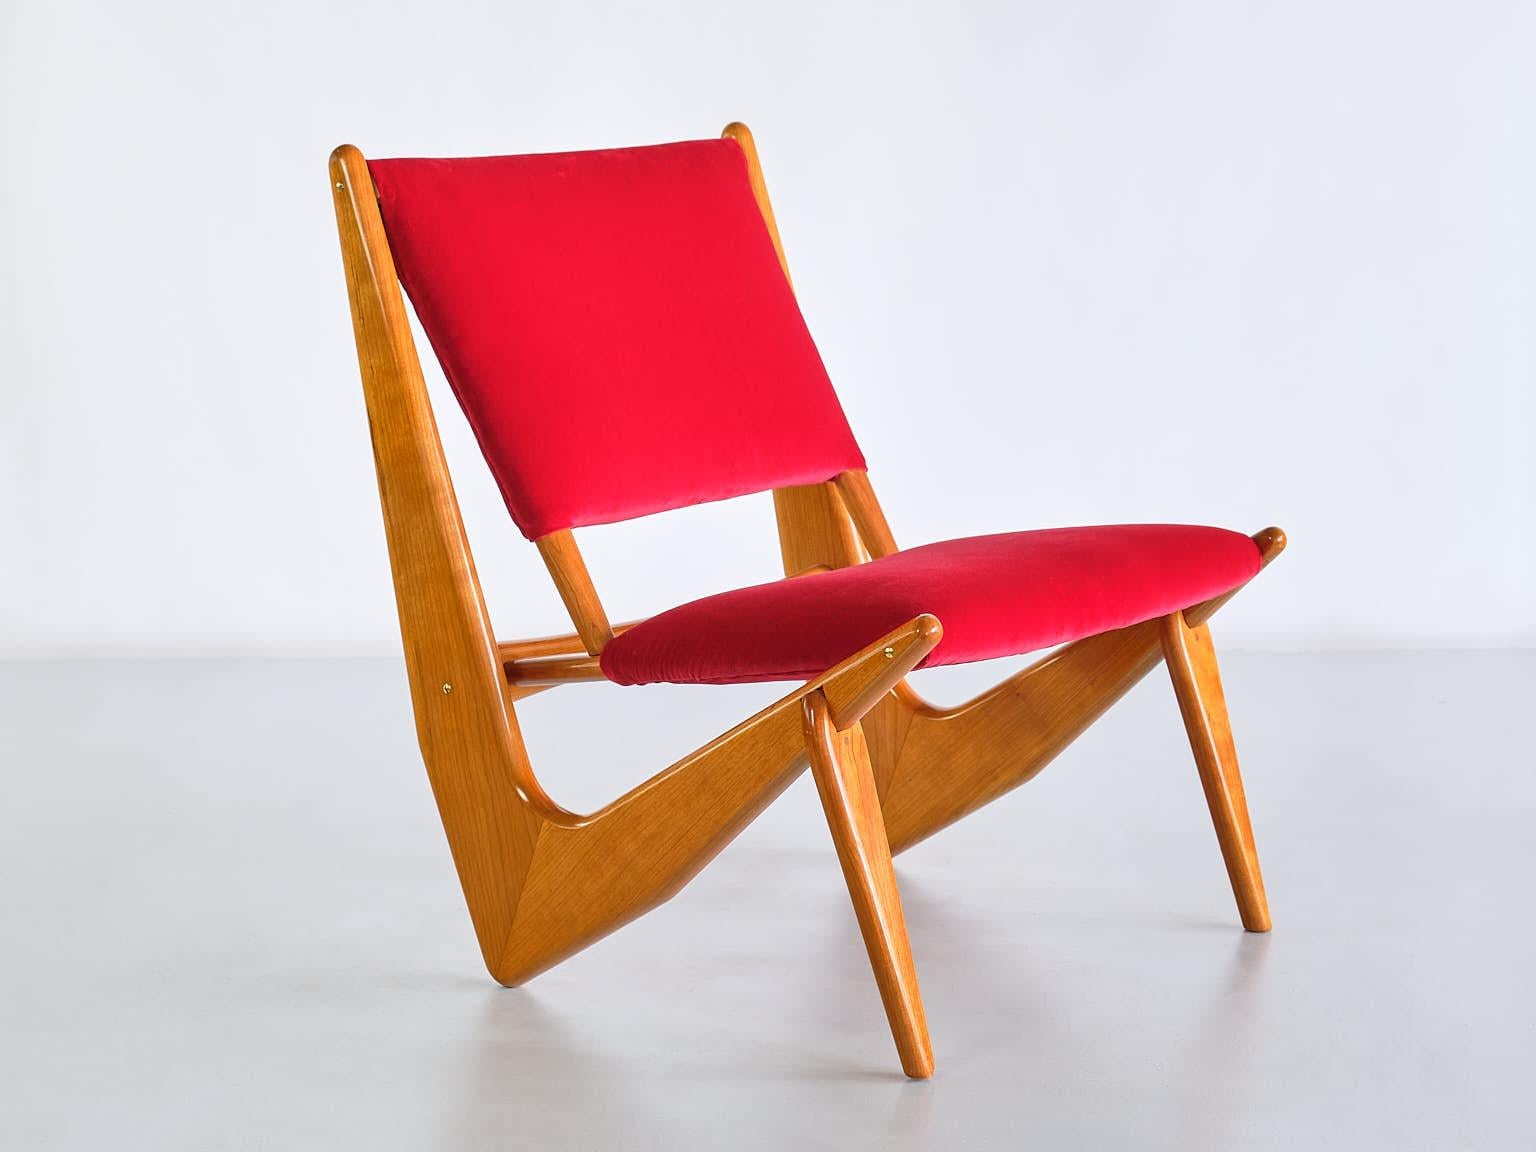 Bertil Behrman Lounge Chair in Oak and Velvet, Engen Möbelfabriker, Sweden, 1956 For Sale 4